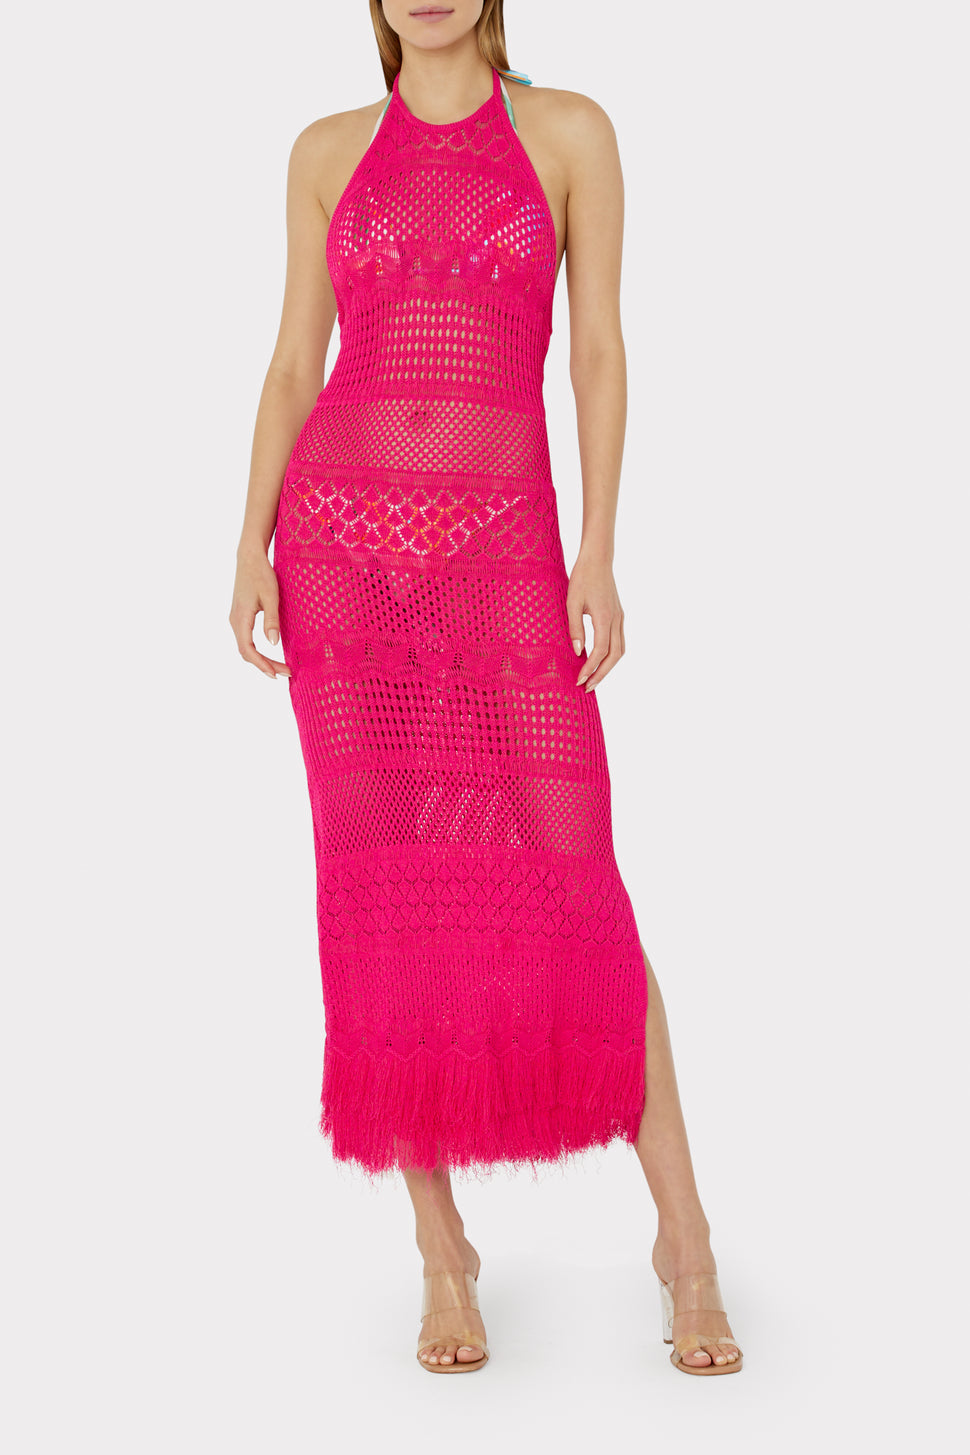 DEAL - Women's Pink/Black Halter Dress - Small - Chest 30